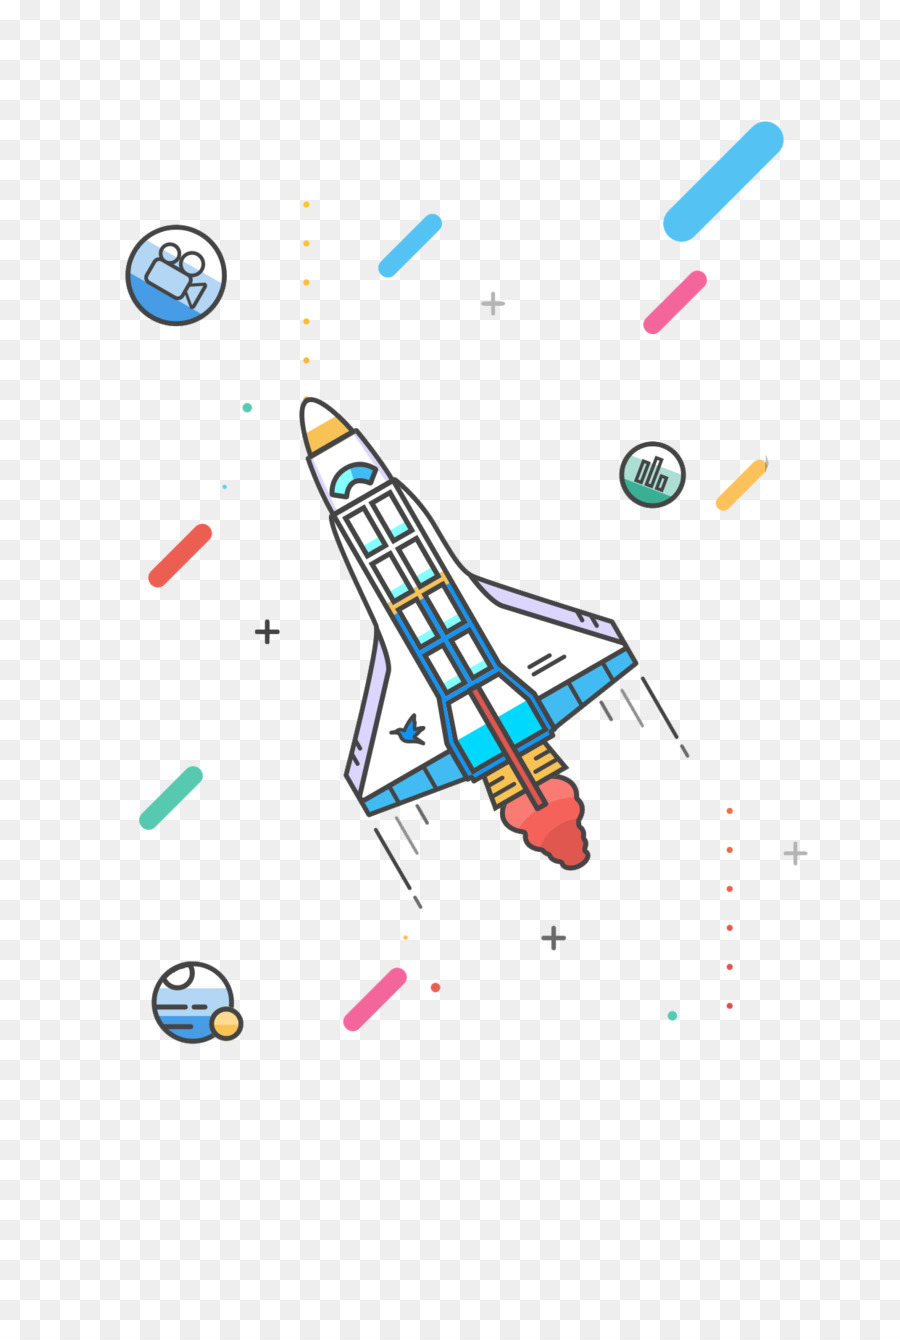 iOS Razzo Sonda Icona - Space Shuttle